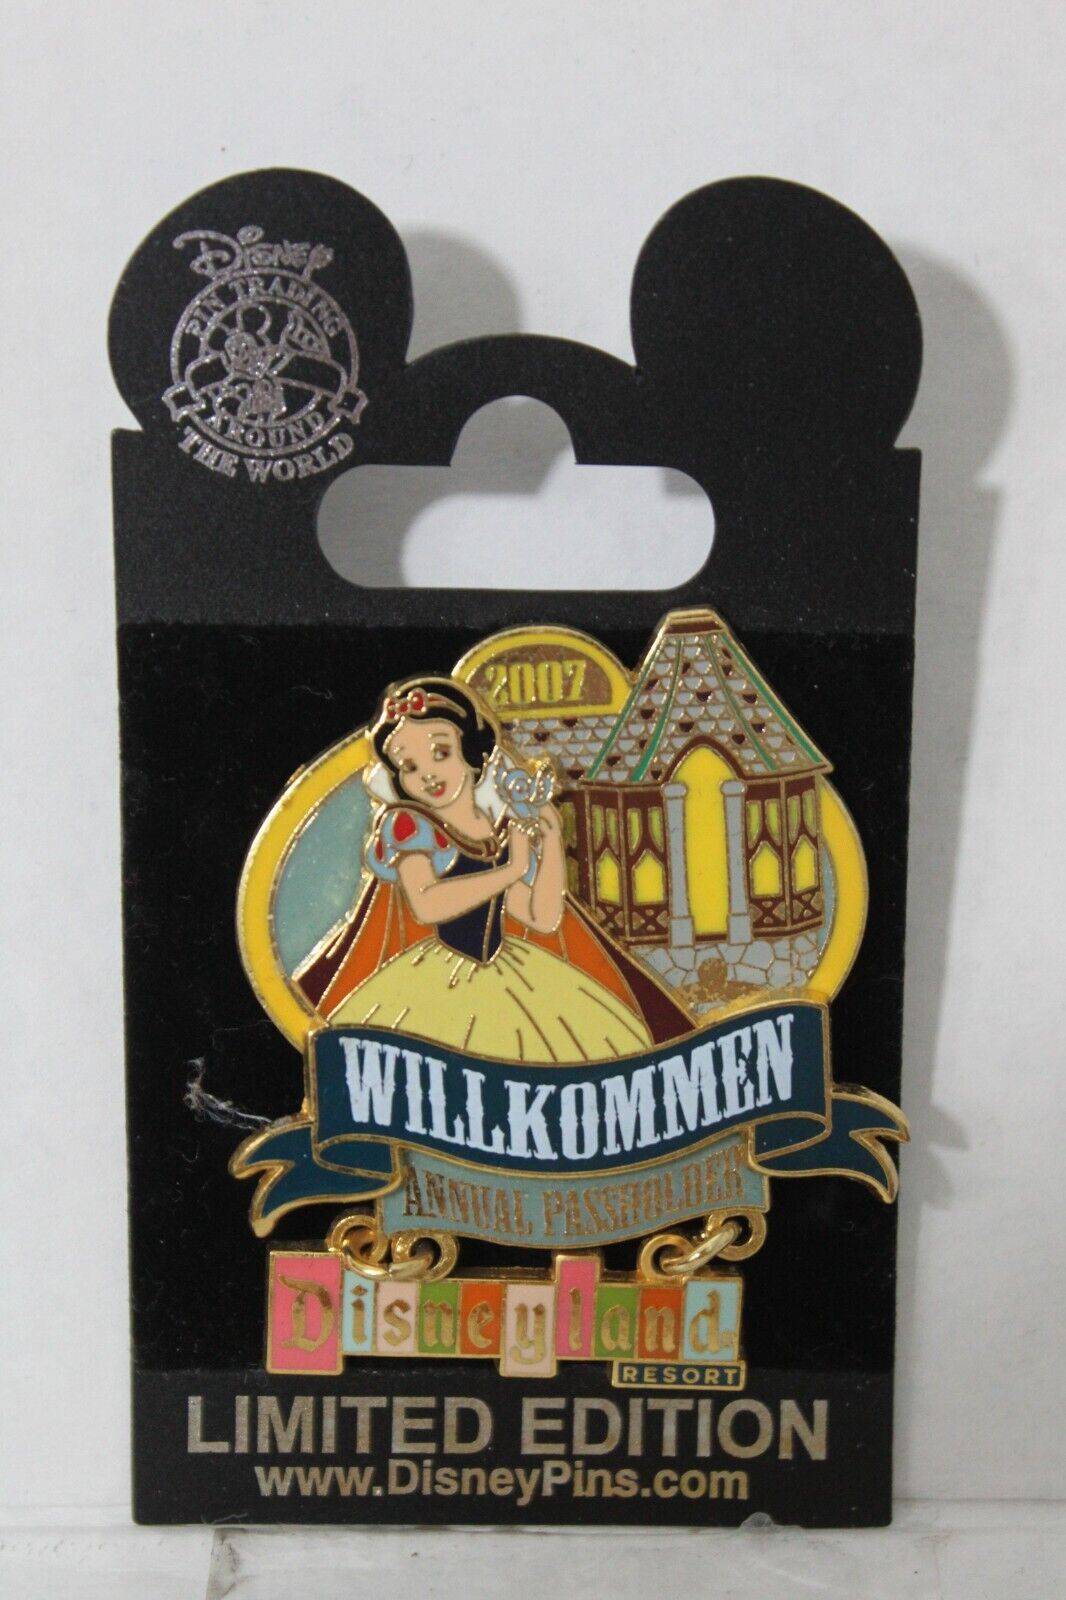 SNOW WHITE WILLKOMMEN Disneyland Retro Annual Passholder Pin DLR 2007 53852